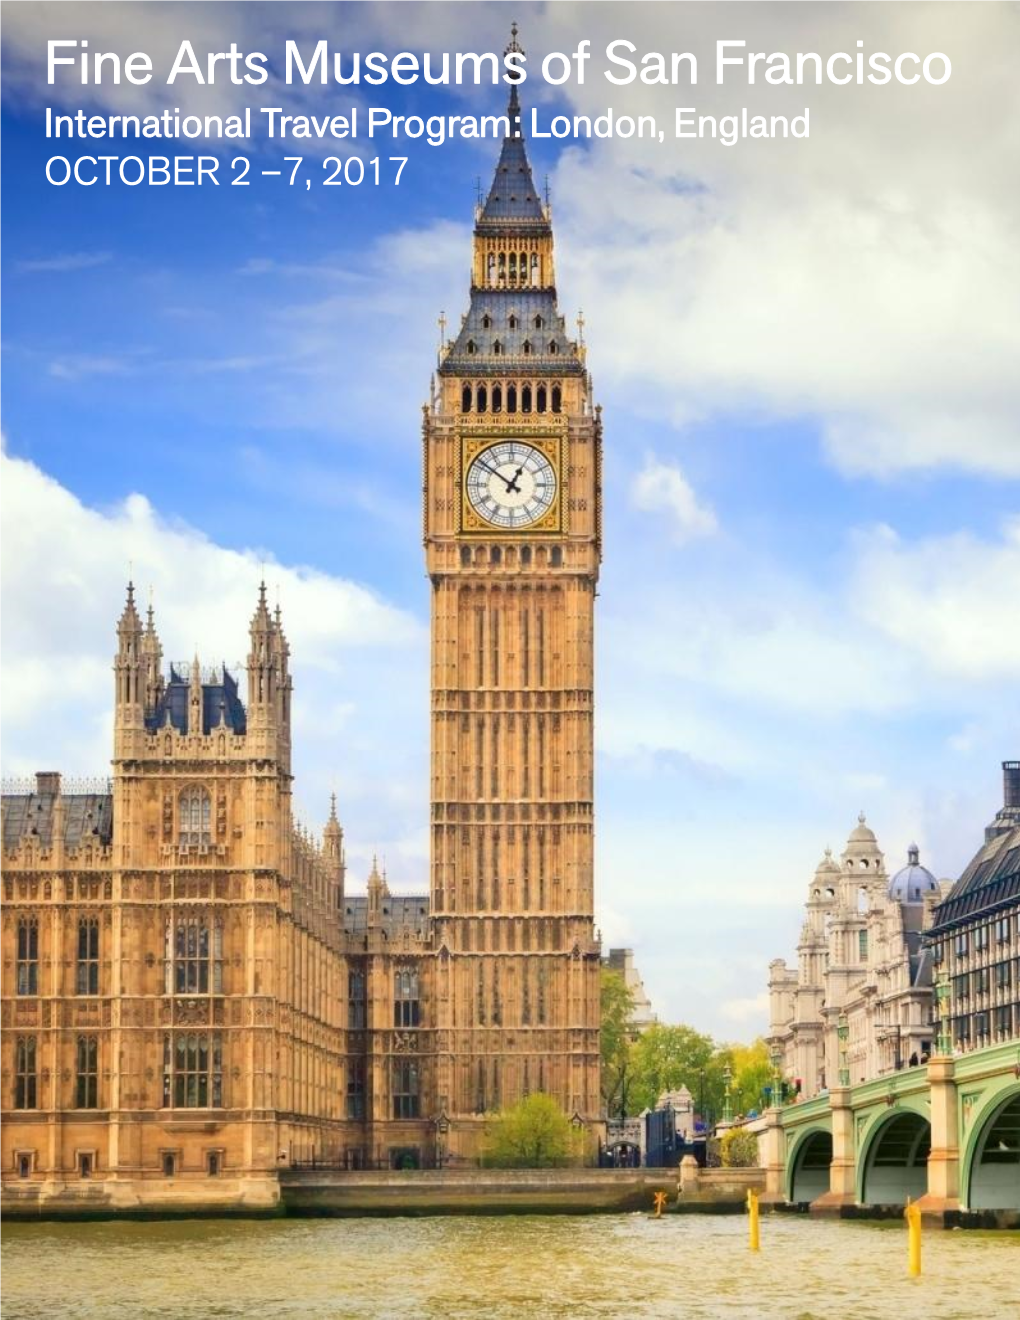 International Travel Program: London, England OCTOBER 2 –7, 2017 ITINERARY Fine Arts Museums of San Francisco London, England: October 2-7, 2017